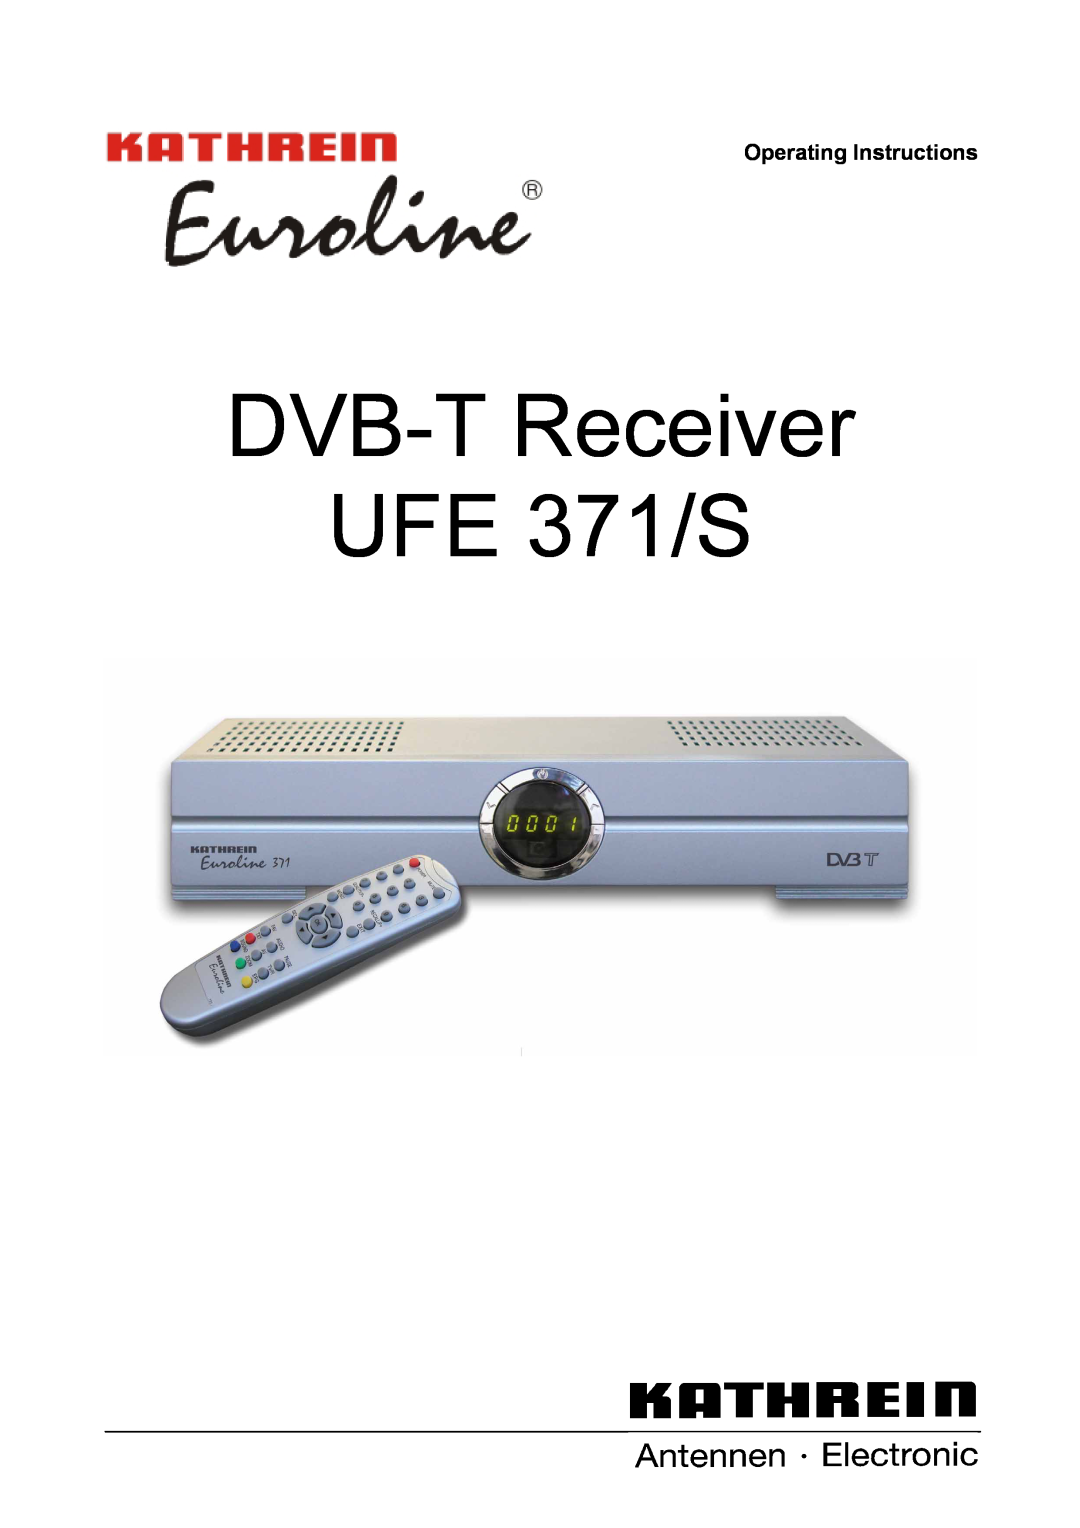 Kathrein manual Operating Instructions, DVB-TReceiver UFE 371/S 